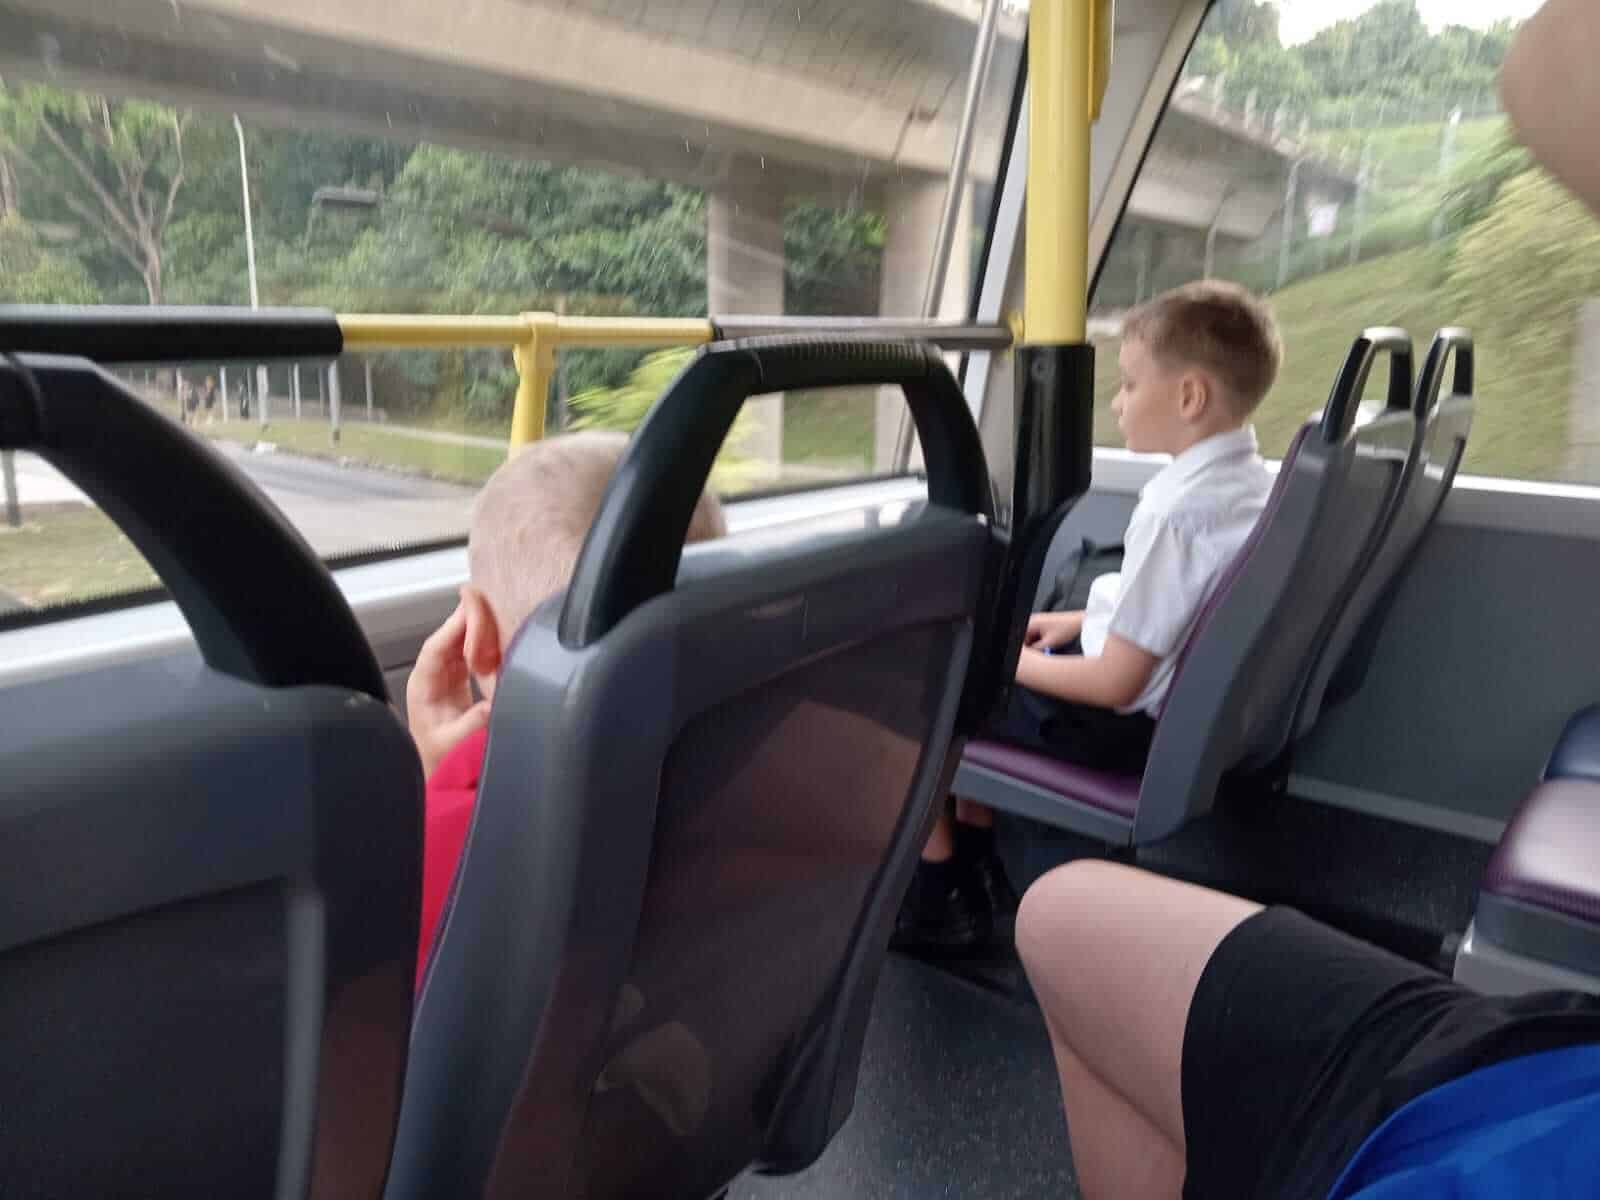 temper tantrums on a bus